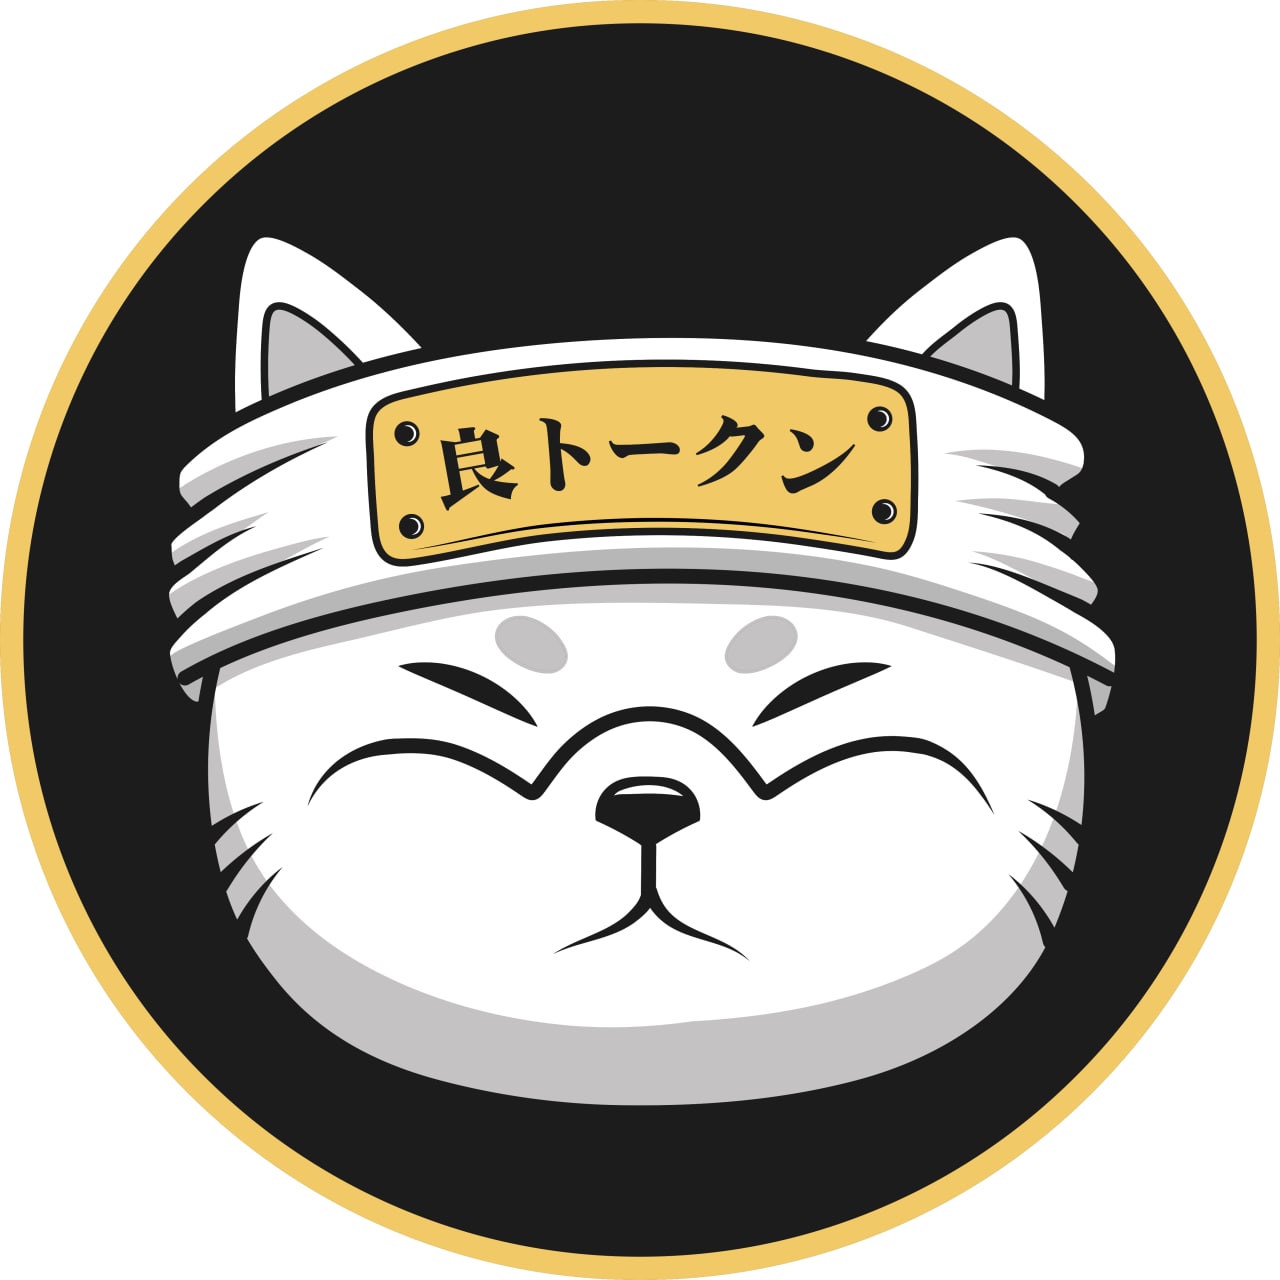 Ryoshi logo